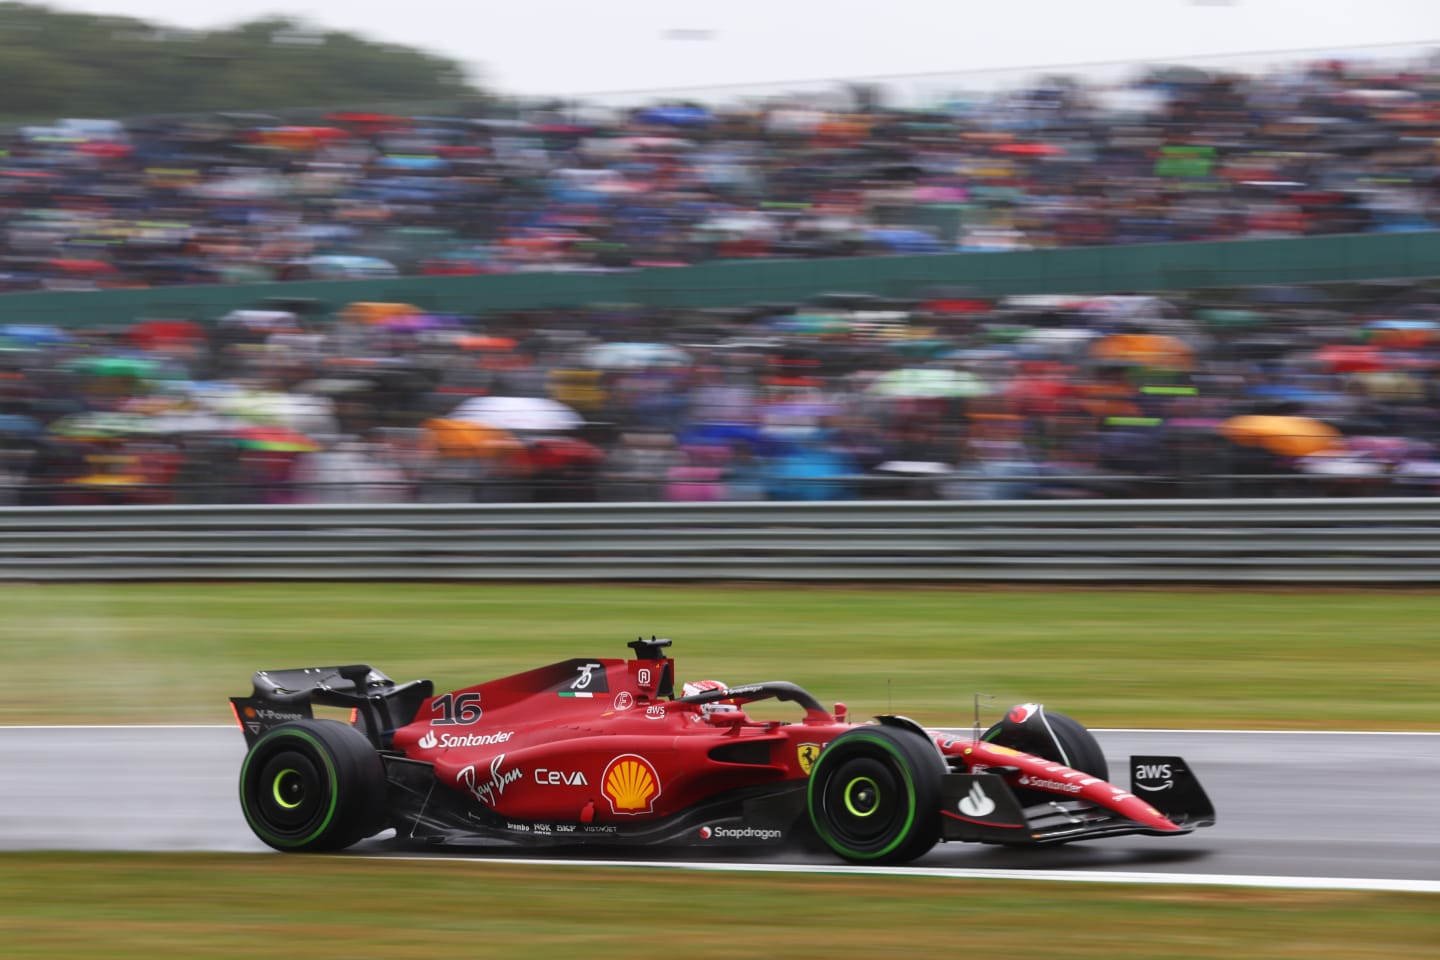 NORTHAMPTON, ENGLAND - JULY 02: Charles Leclerc of Monaco driving (16) the Ferrari F1-75 on track